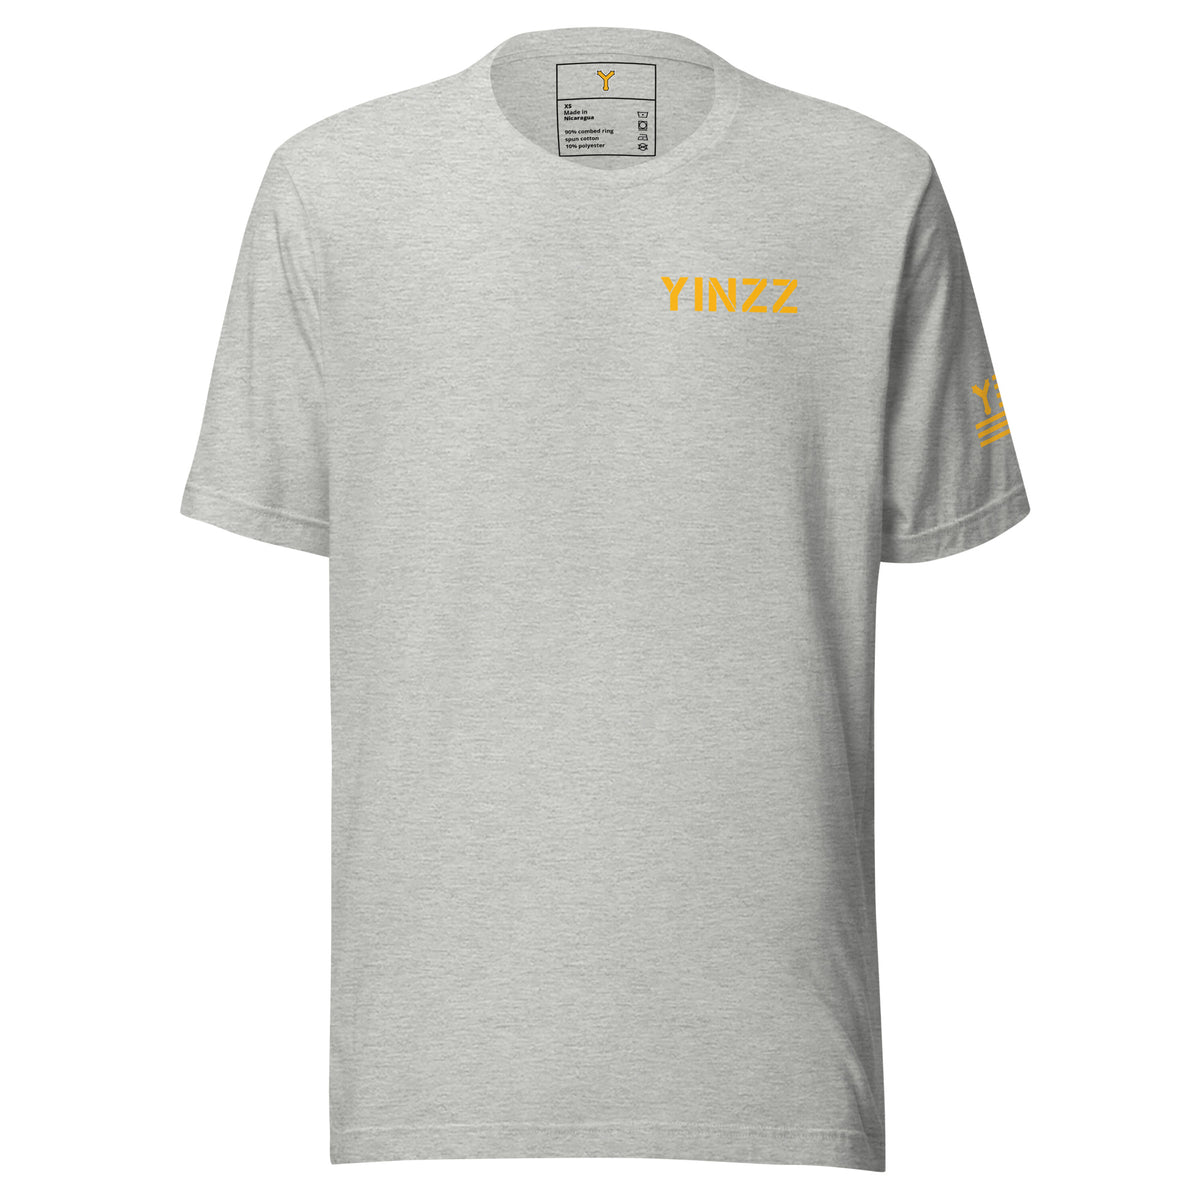 YINZZ Nation Tee | YINZZ T-shirt